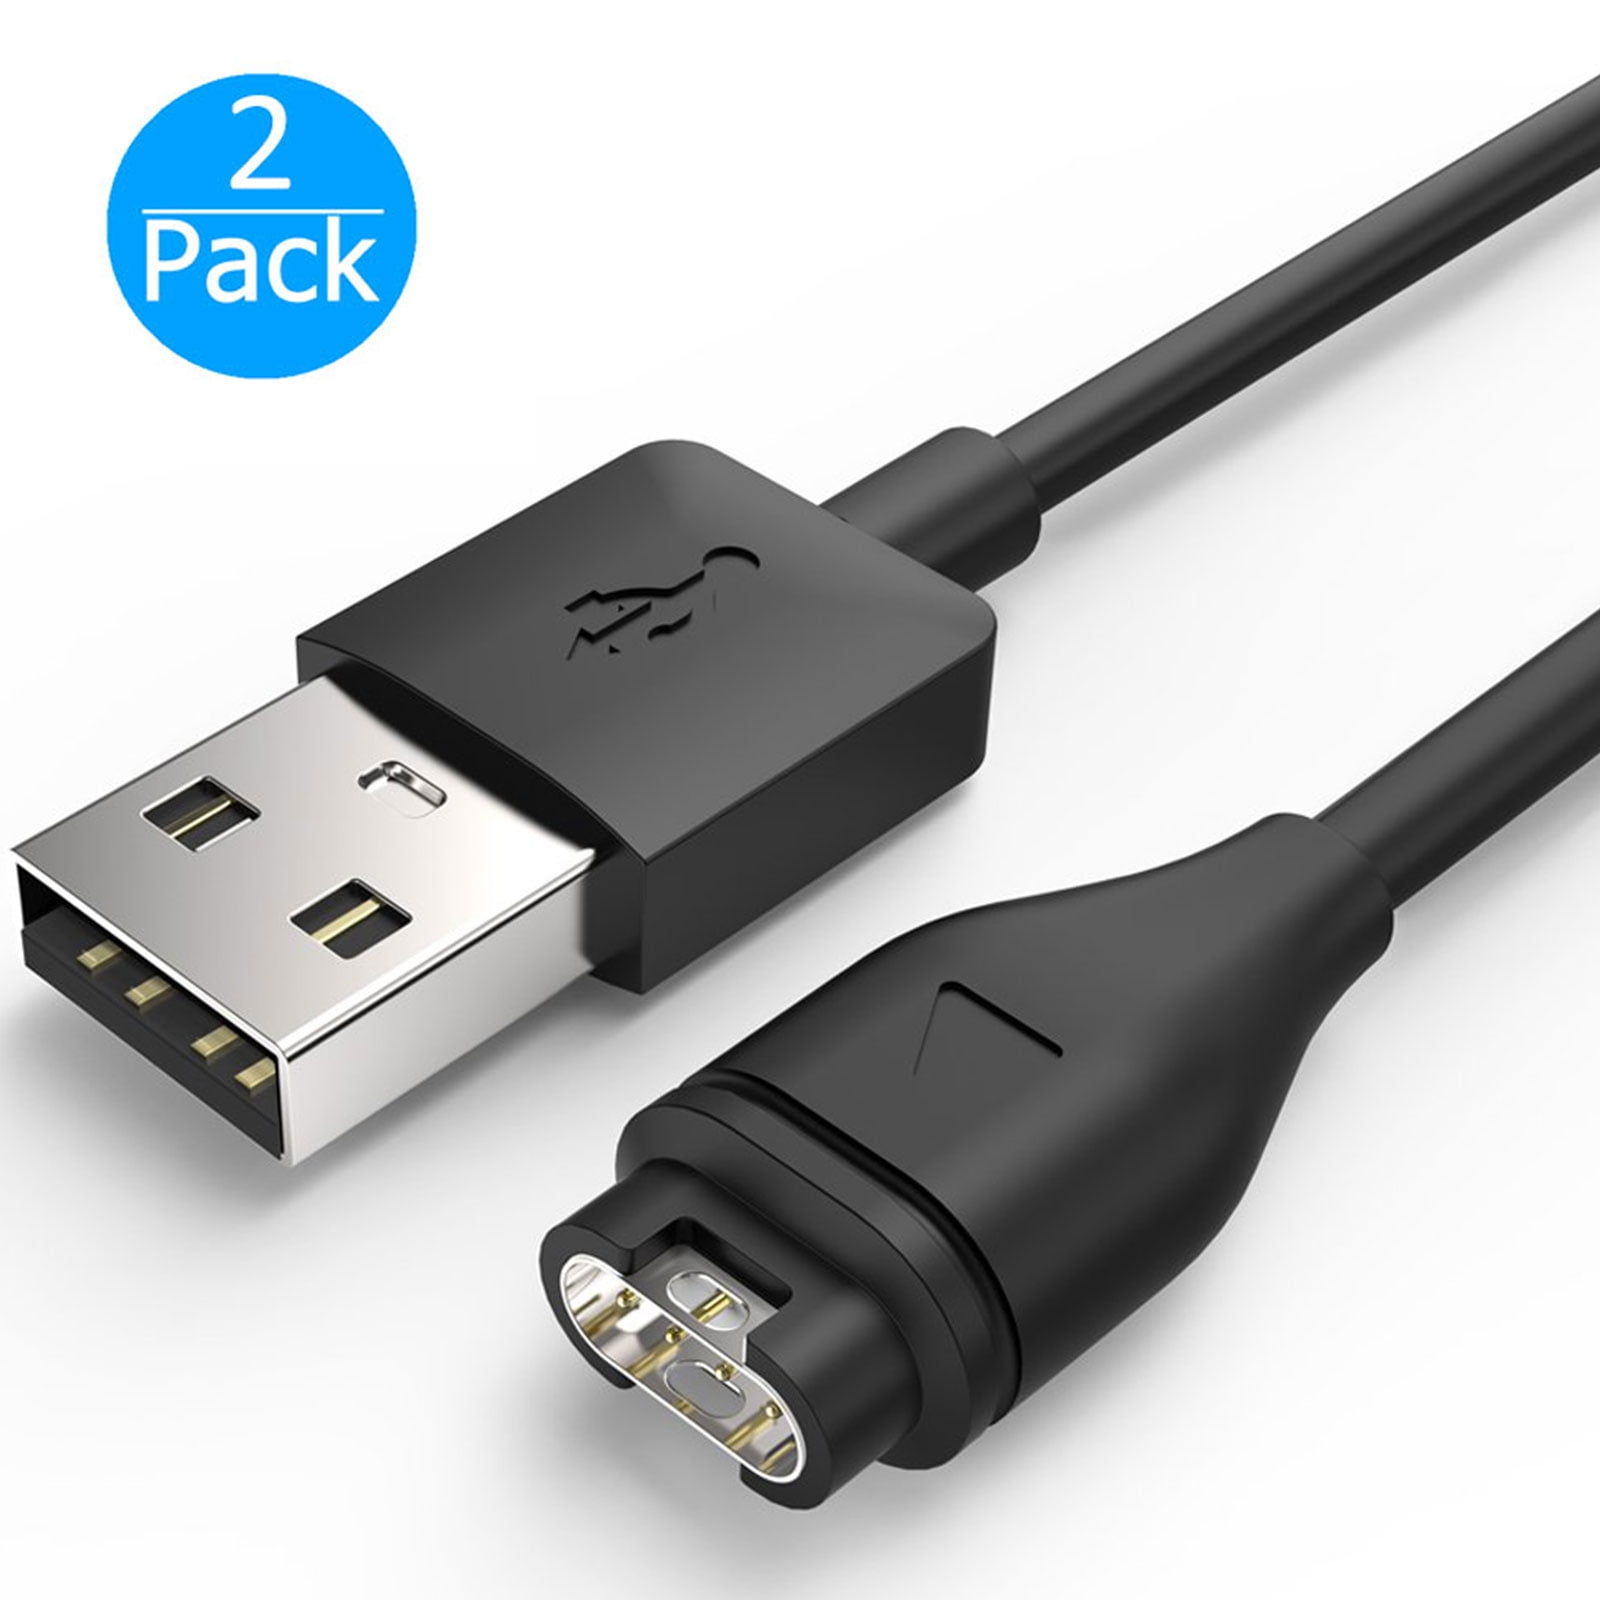 USB Charger Charging Cable Cord For Garmin Fenix 5/5S/5X Vivoactive 3  Vivo CL